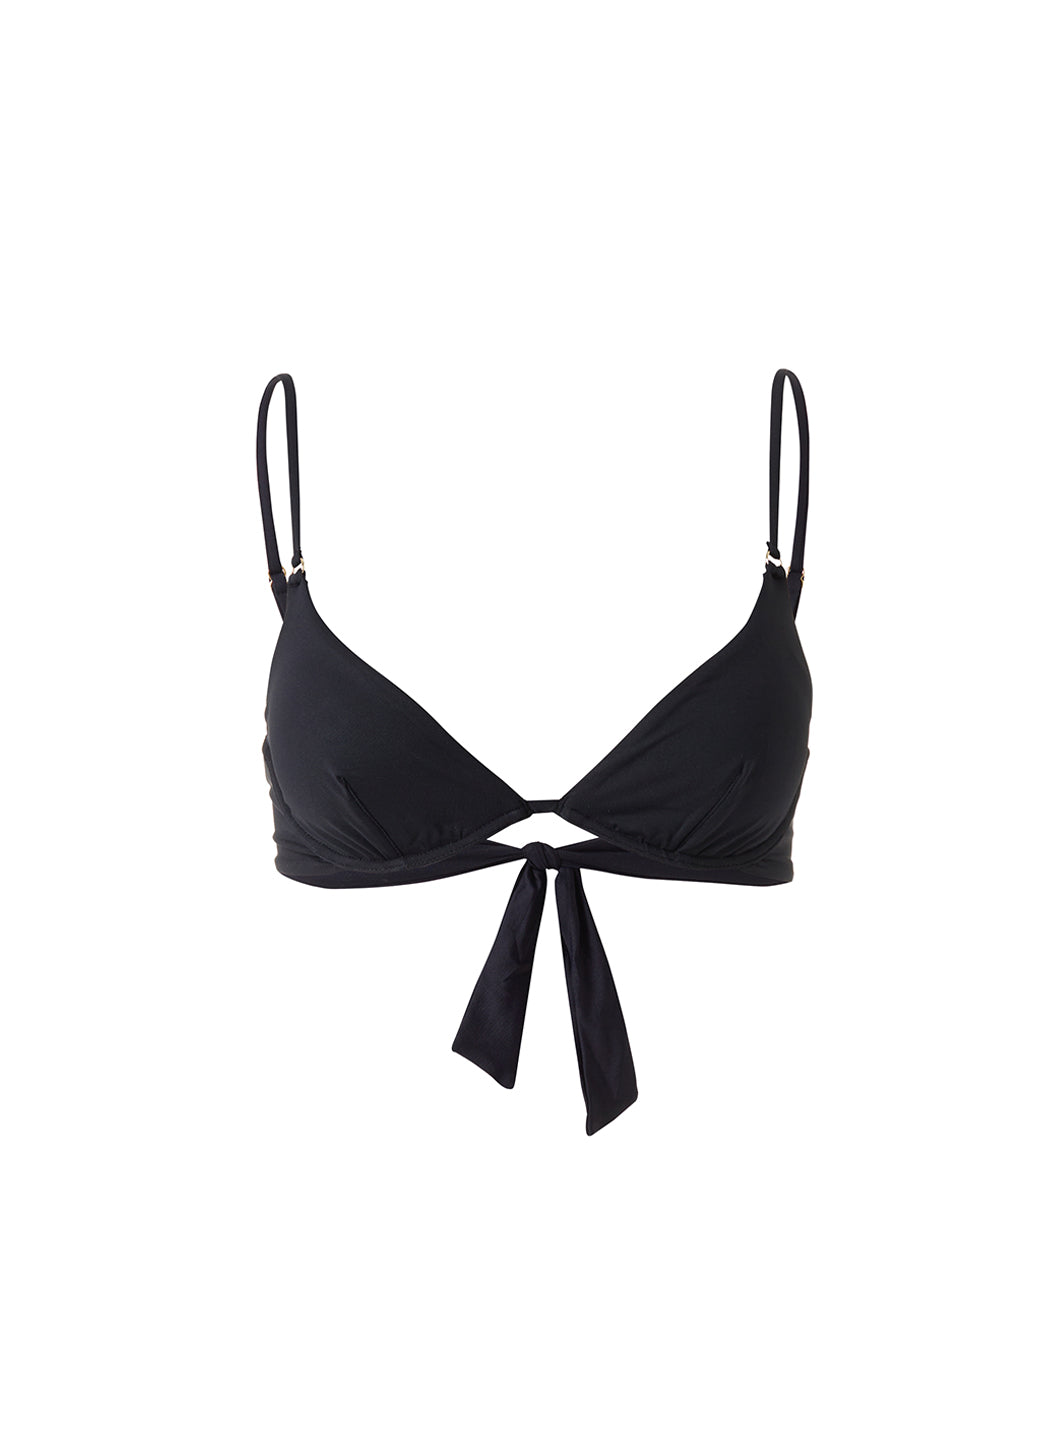 Key Largo Black Bikini Top Cutout